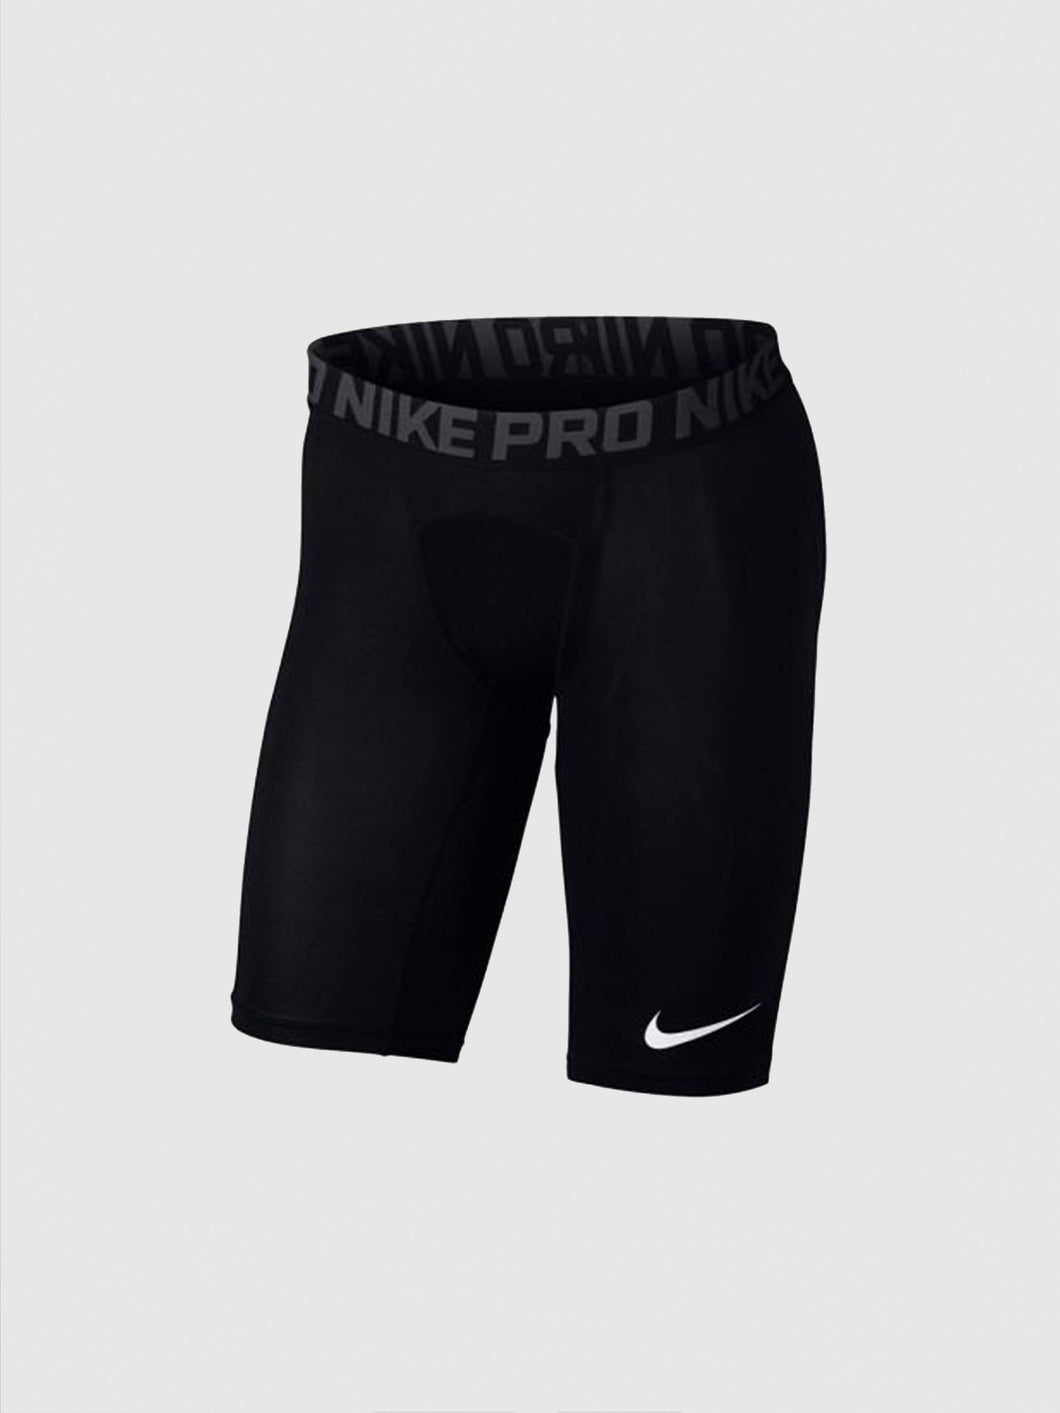 Mens Nike Pro & Compression Bottoms Shorts.